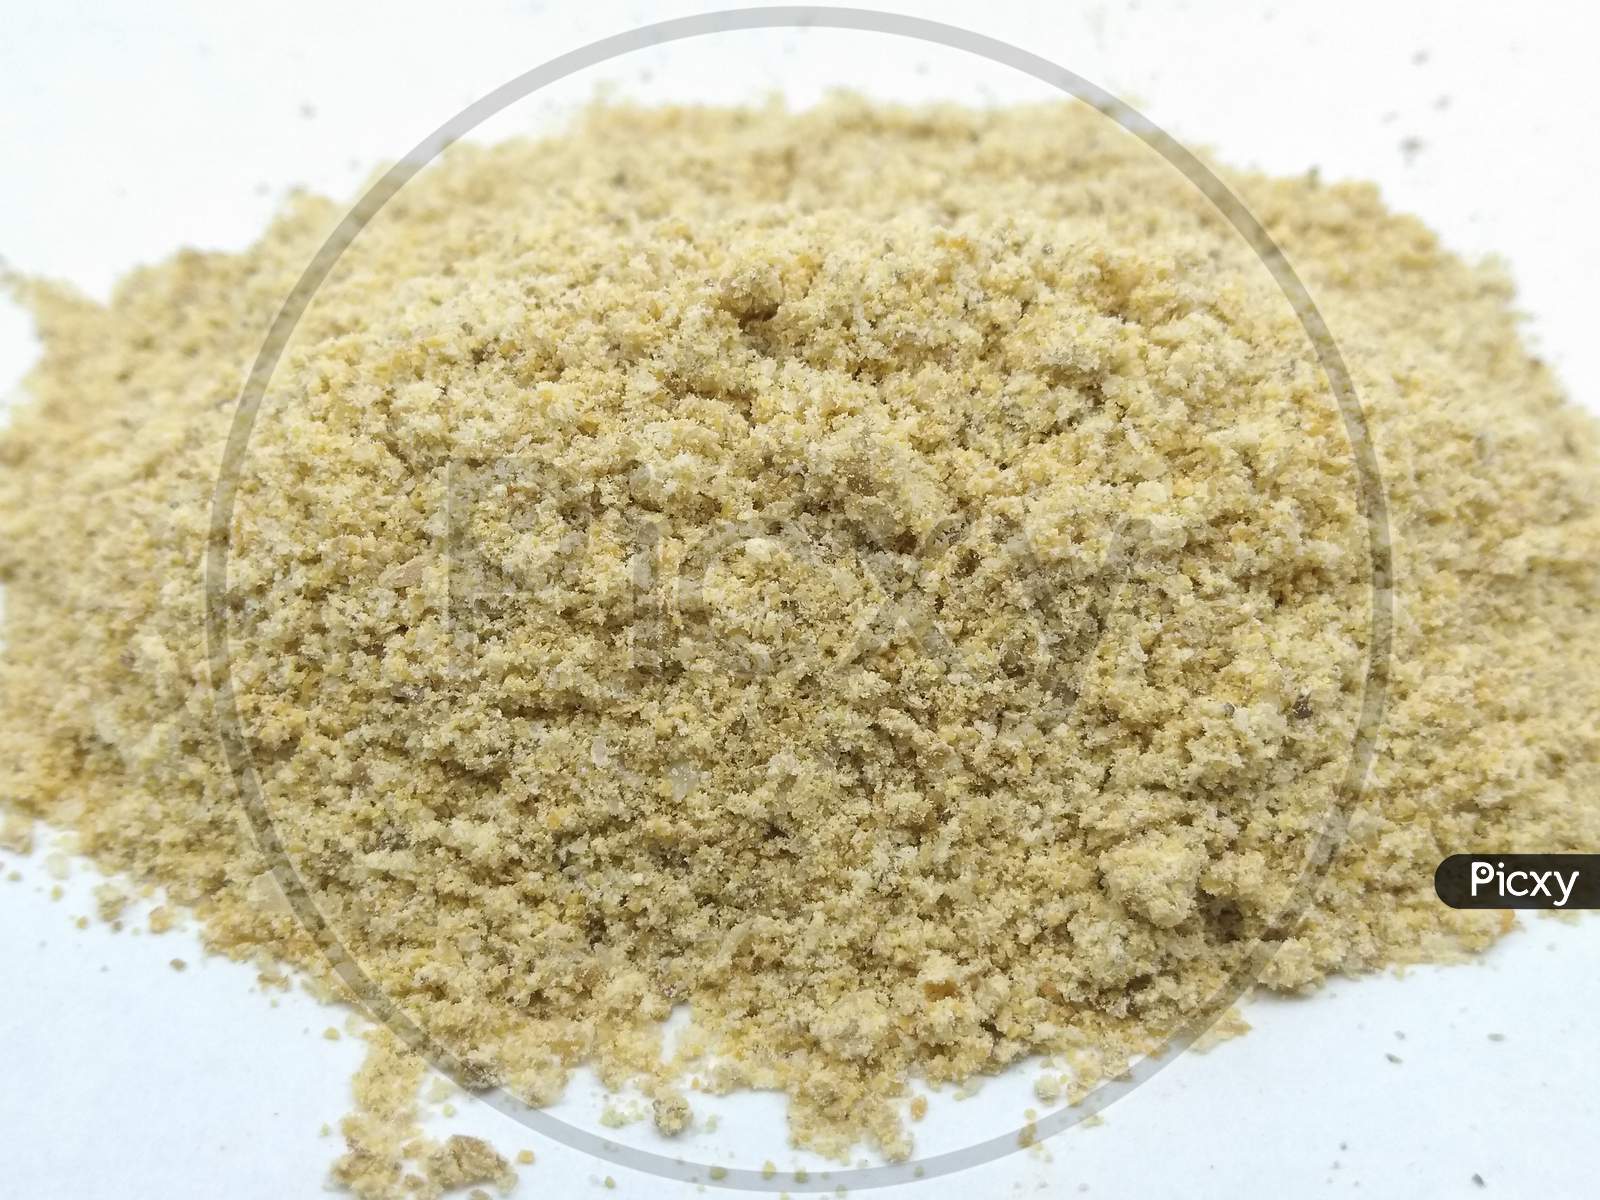 A picture of fenugreek powder